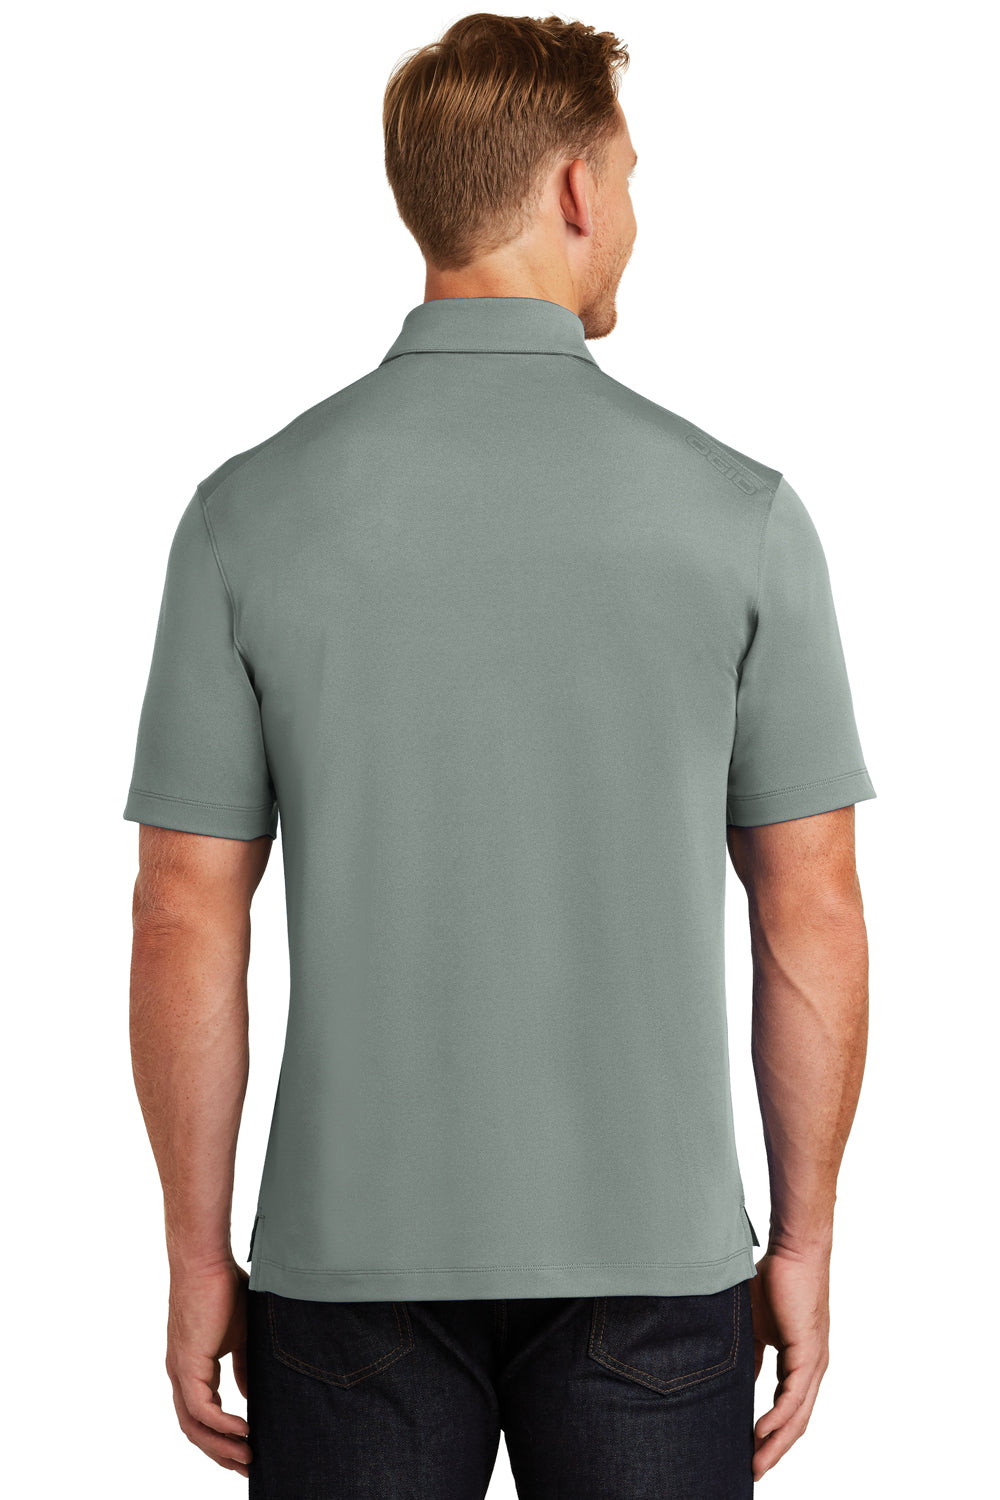 Ogio OG131 Mens Fuse Moisture Wicking Short Sleeve Polo Shirt w/ Pocket Grey Back